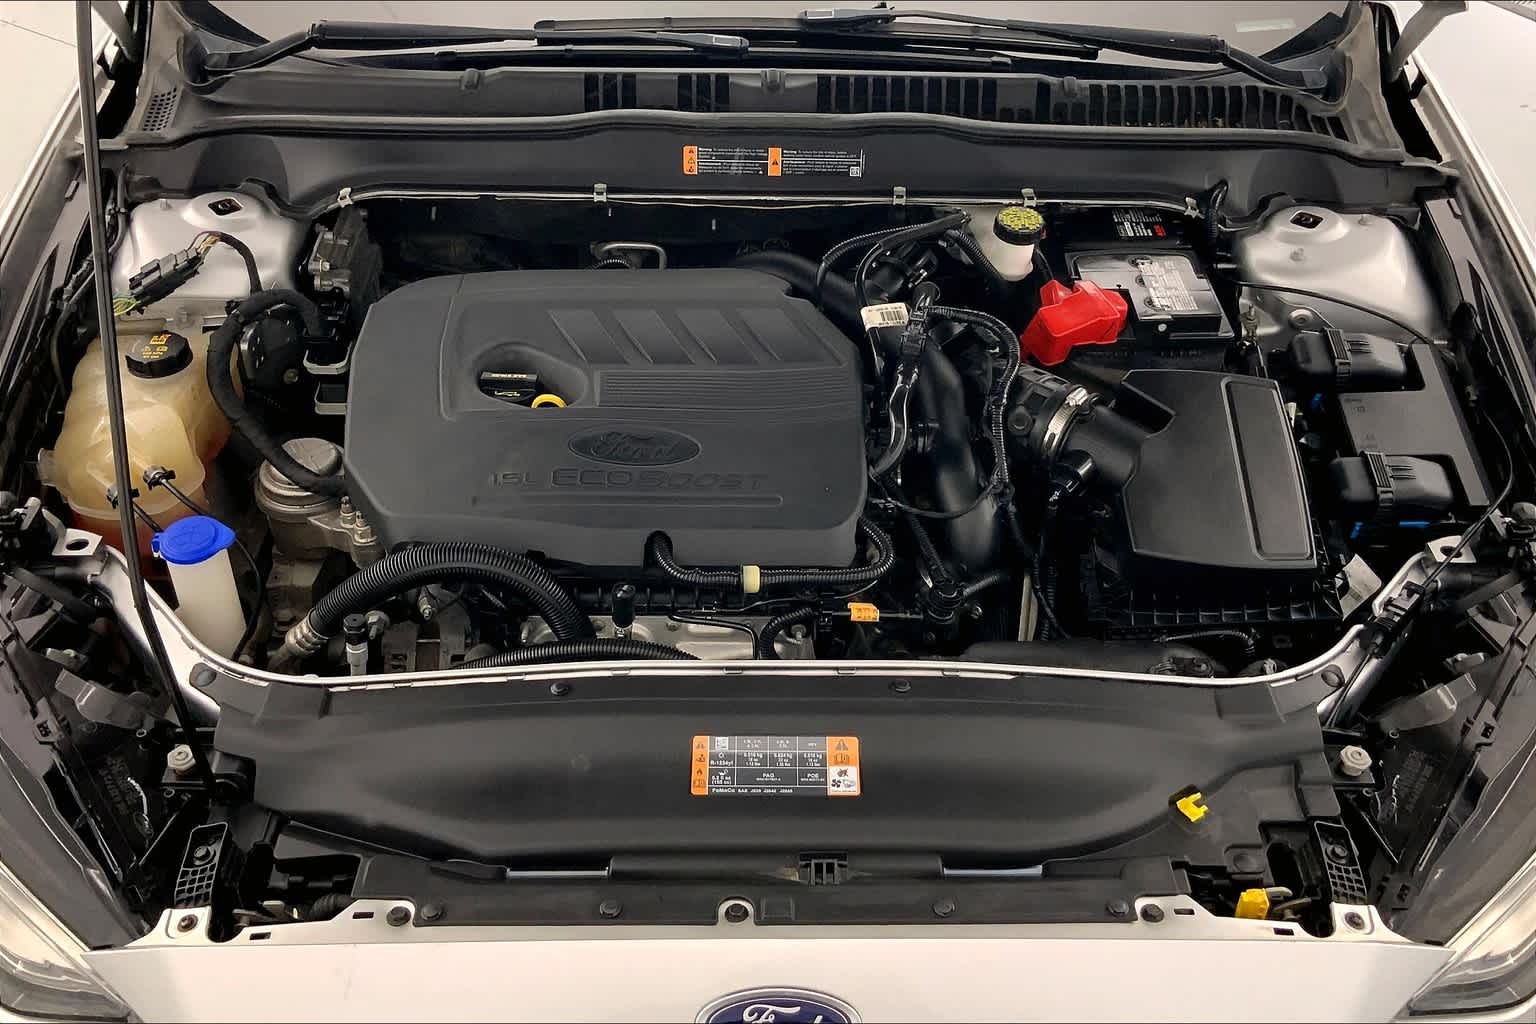 2018 Ford Fusion SE 9